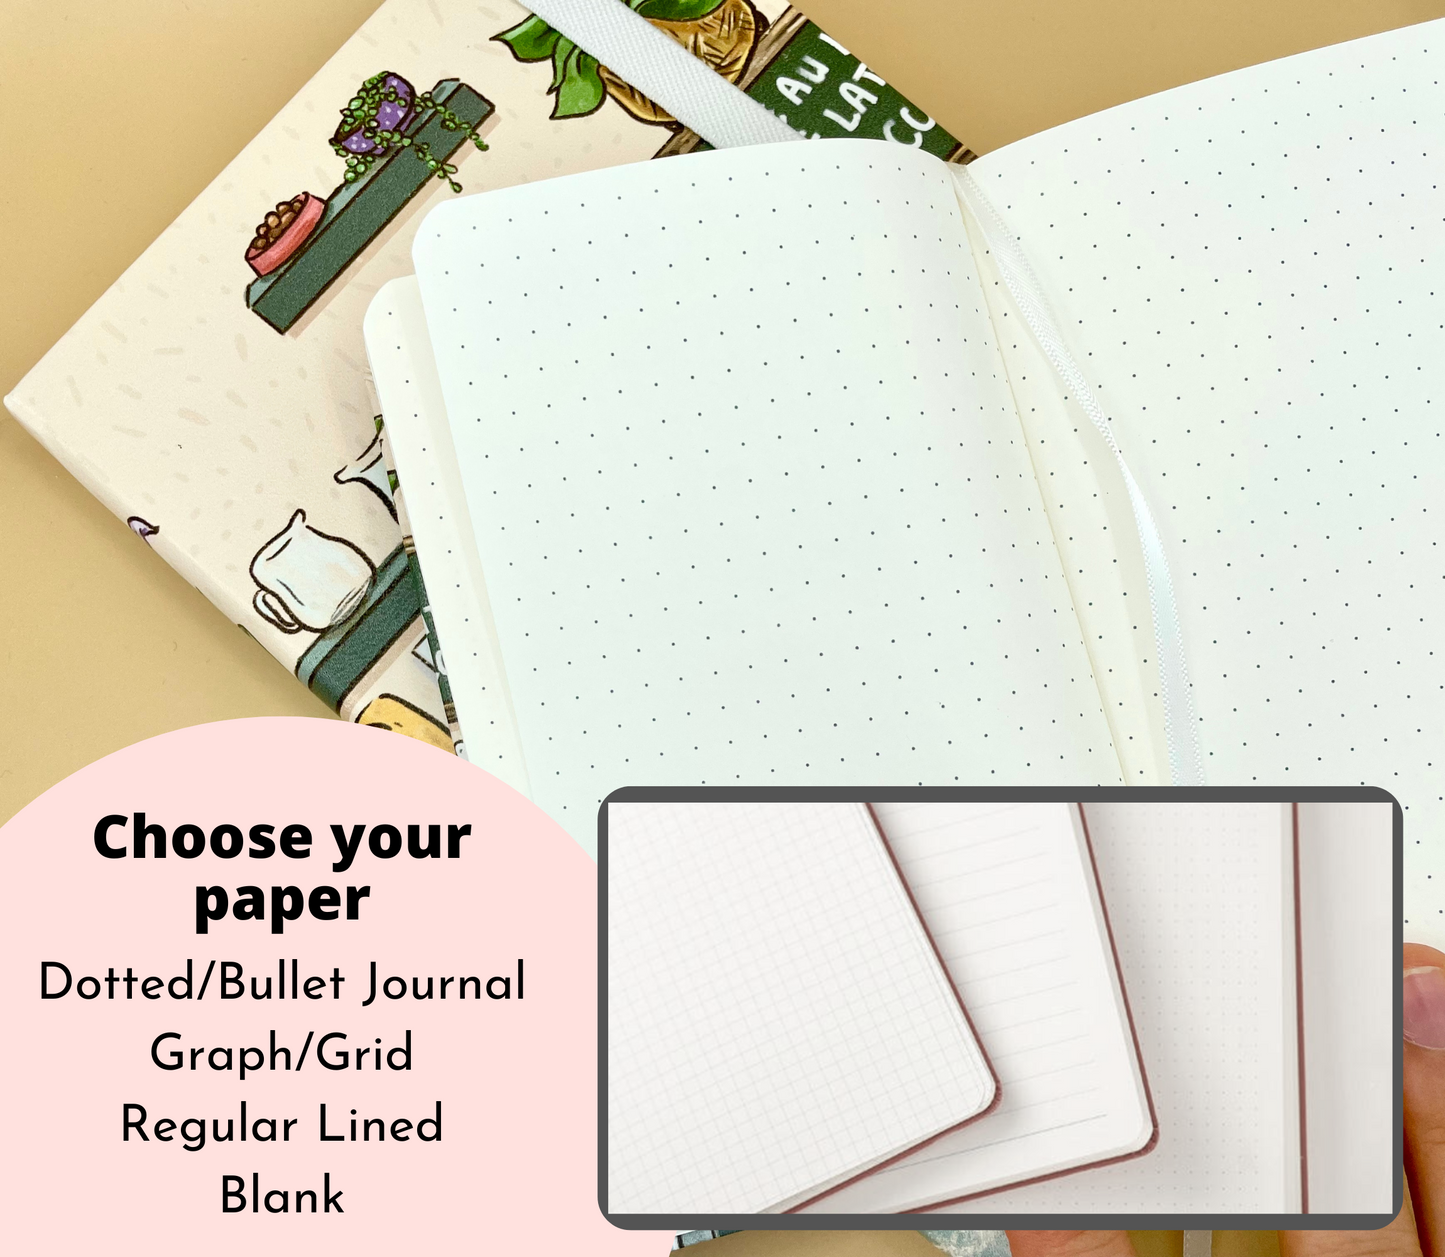 Zodiac Notebooks | A5, A6 | Grid, Dotted Bullet Journal